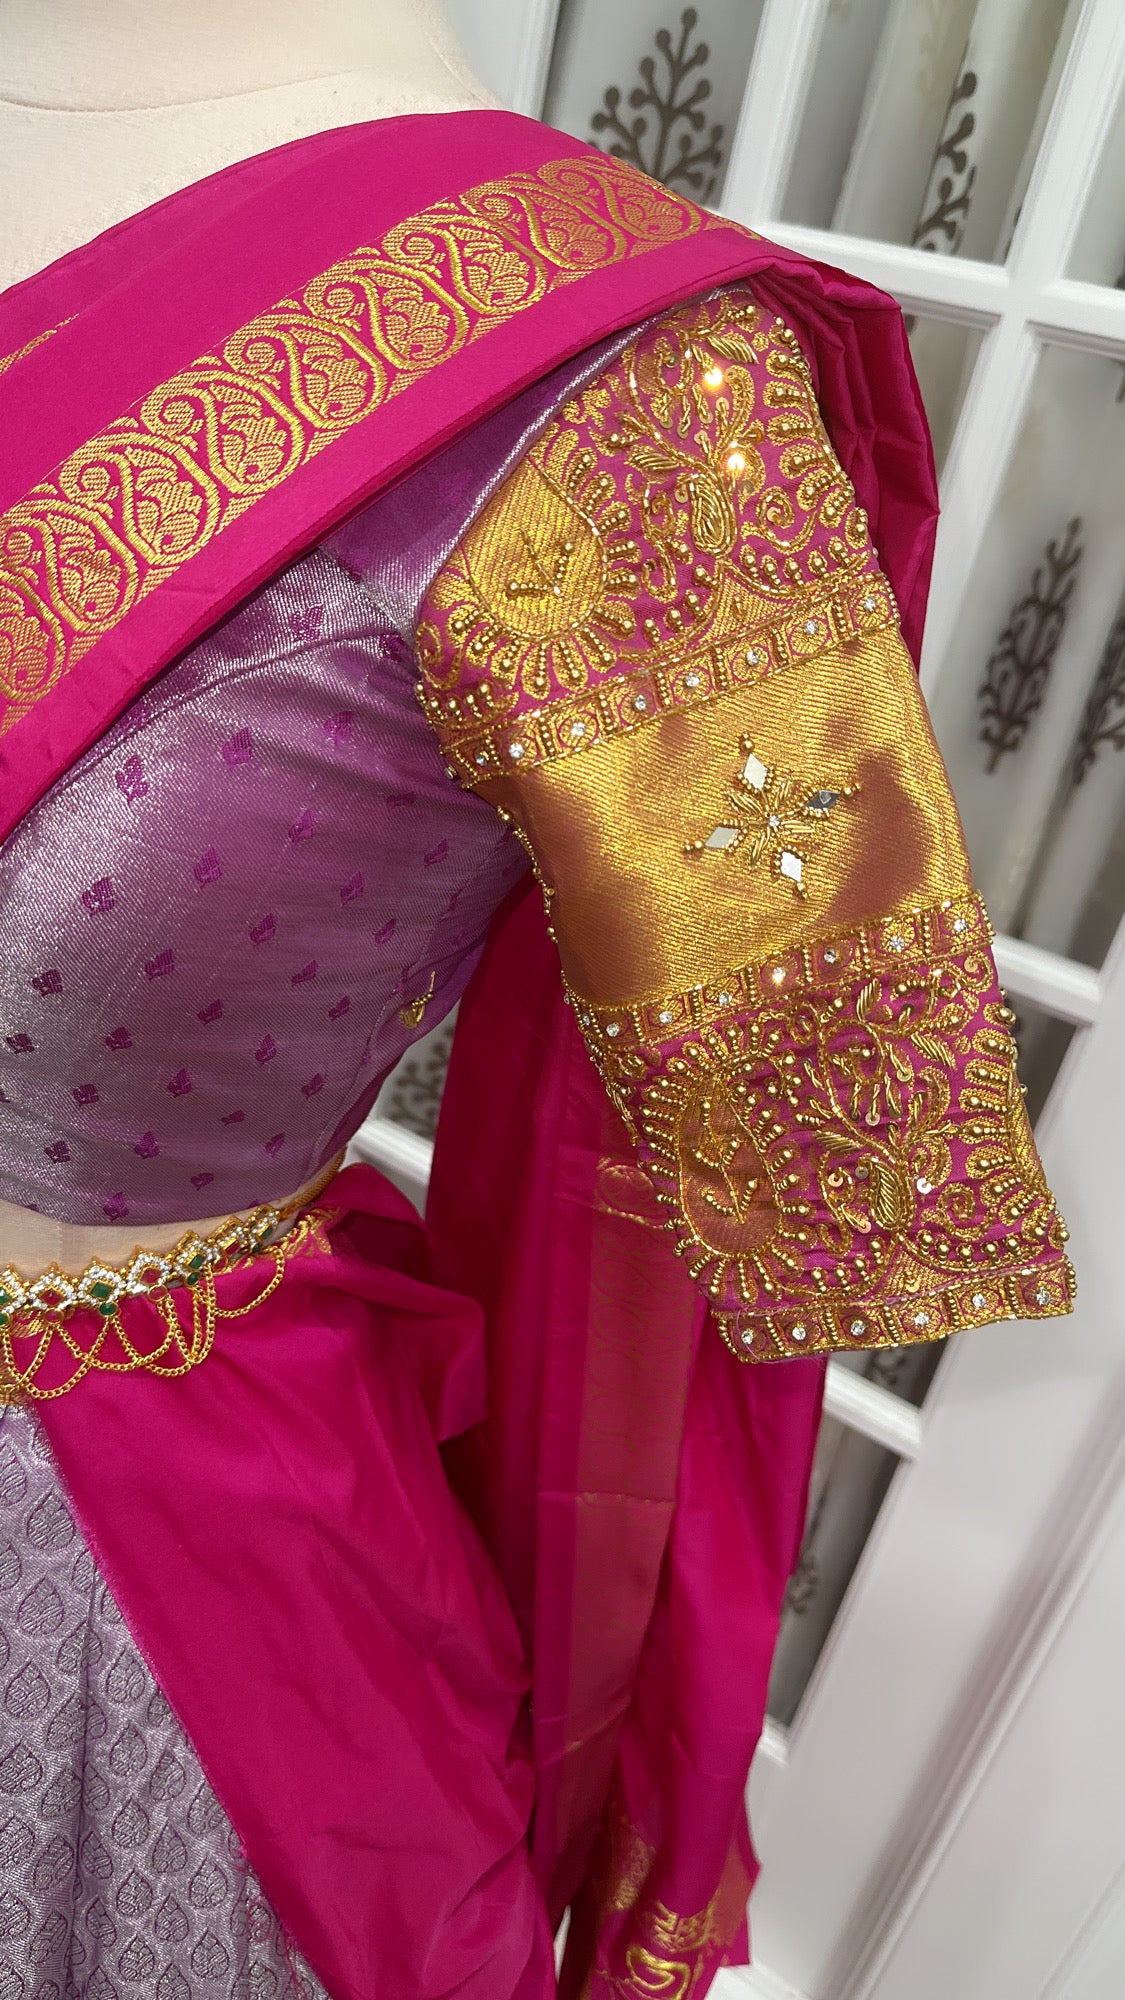 Elegant Lavender color Kanchi Pattu half saree Langa Voni for teens with grand Maggam work blouse | Half saree function | Teen Partywear dress Ready 2 ship